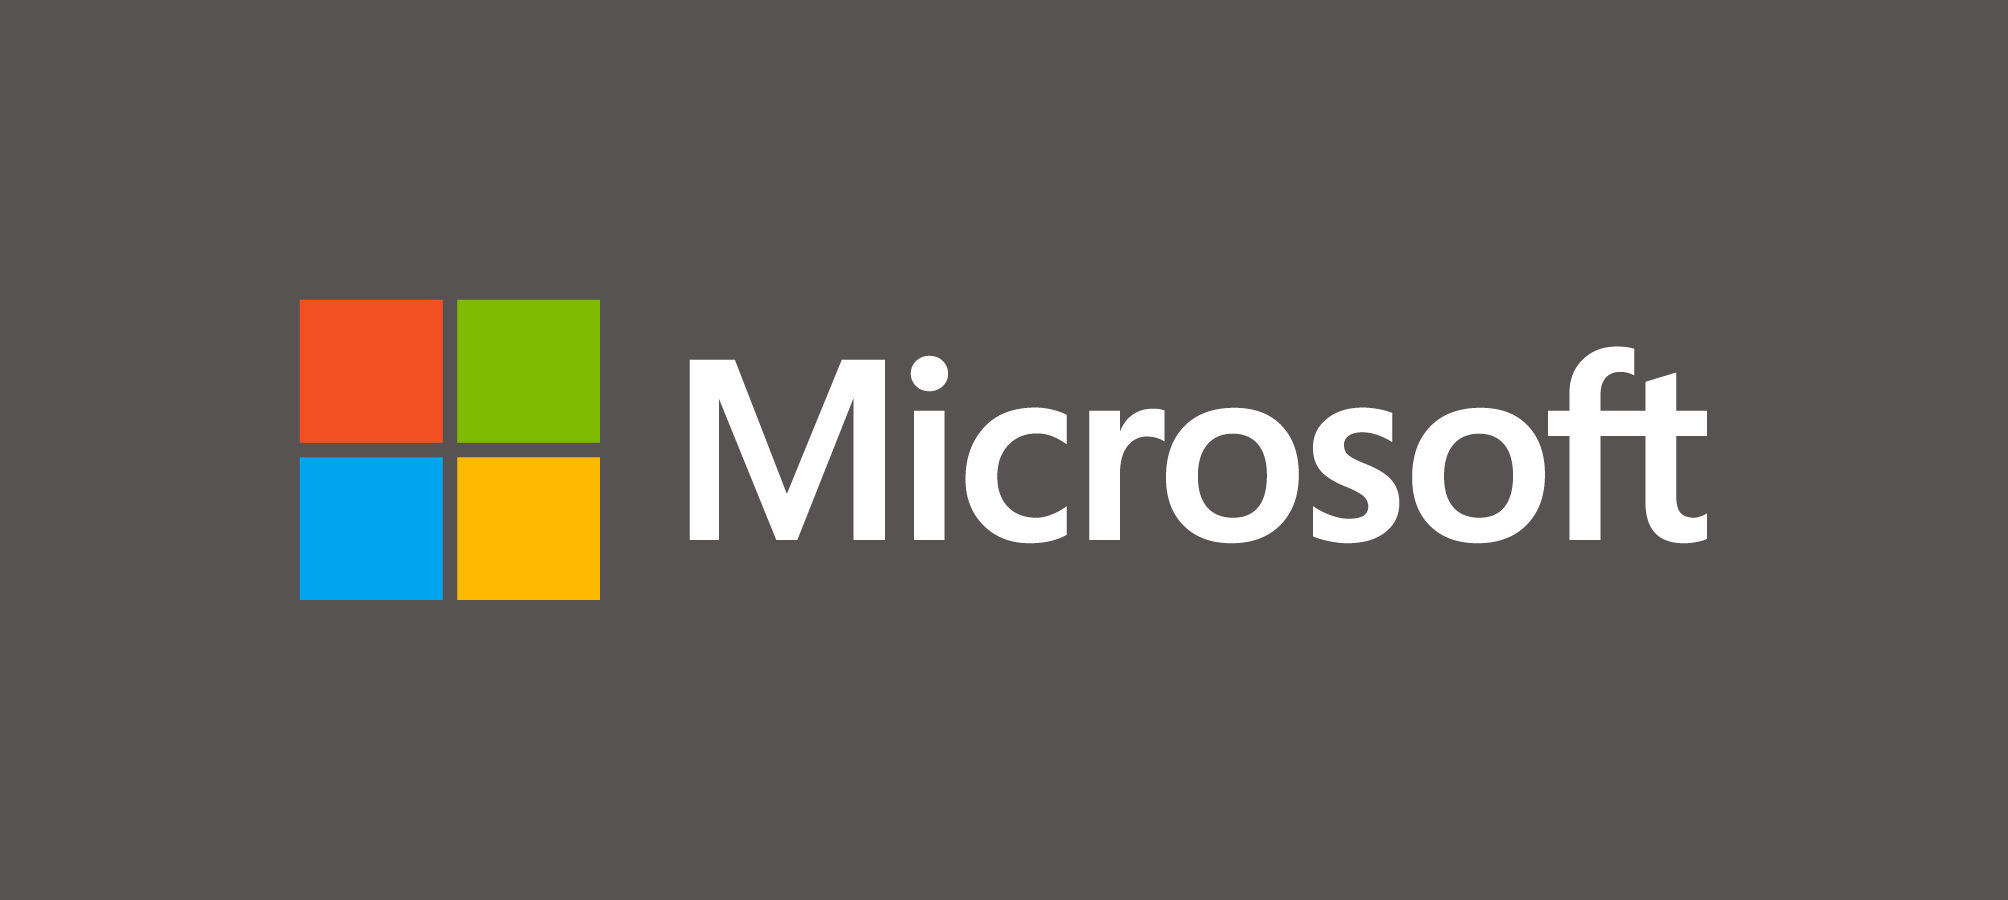 Microsoft Teams free offer